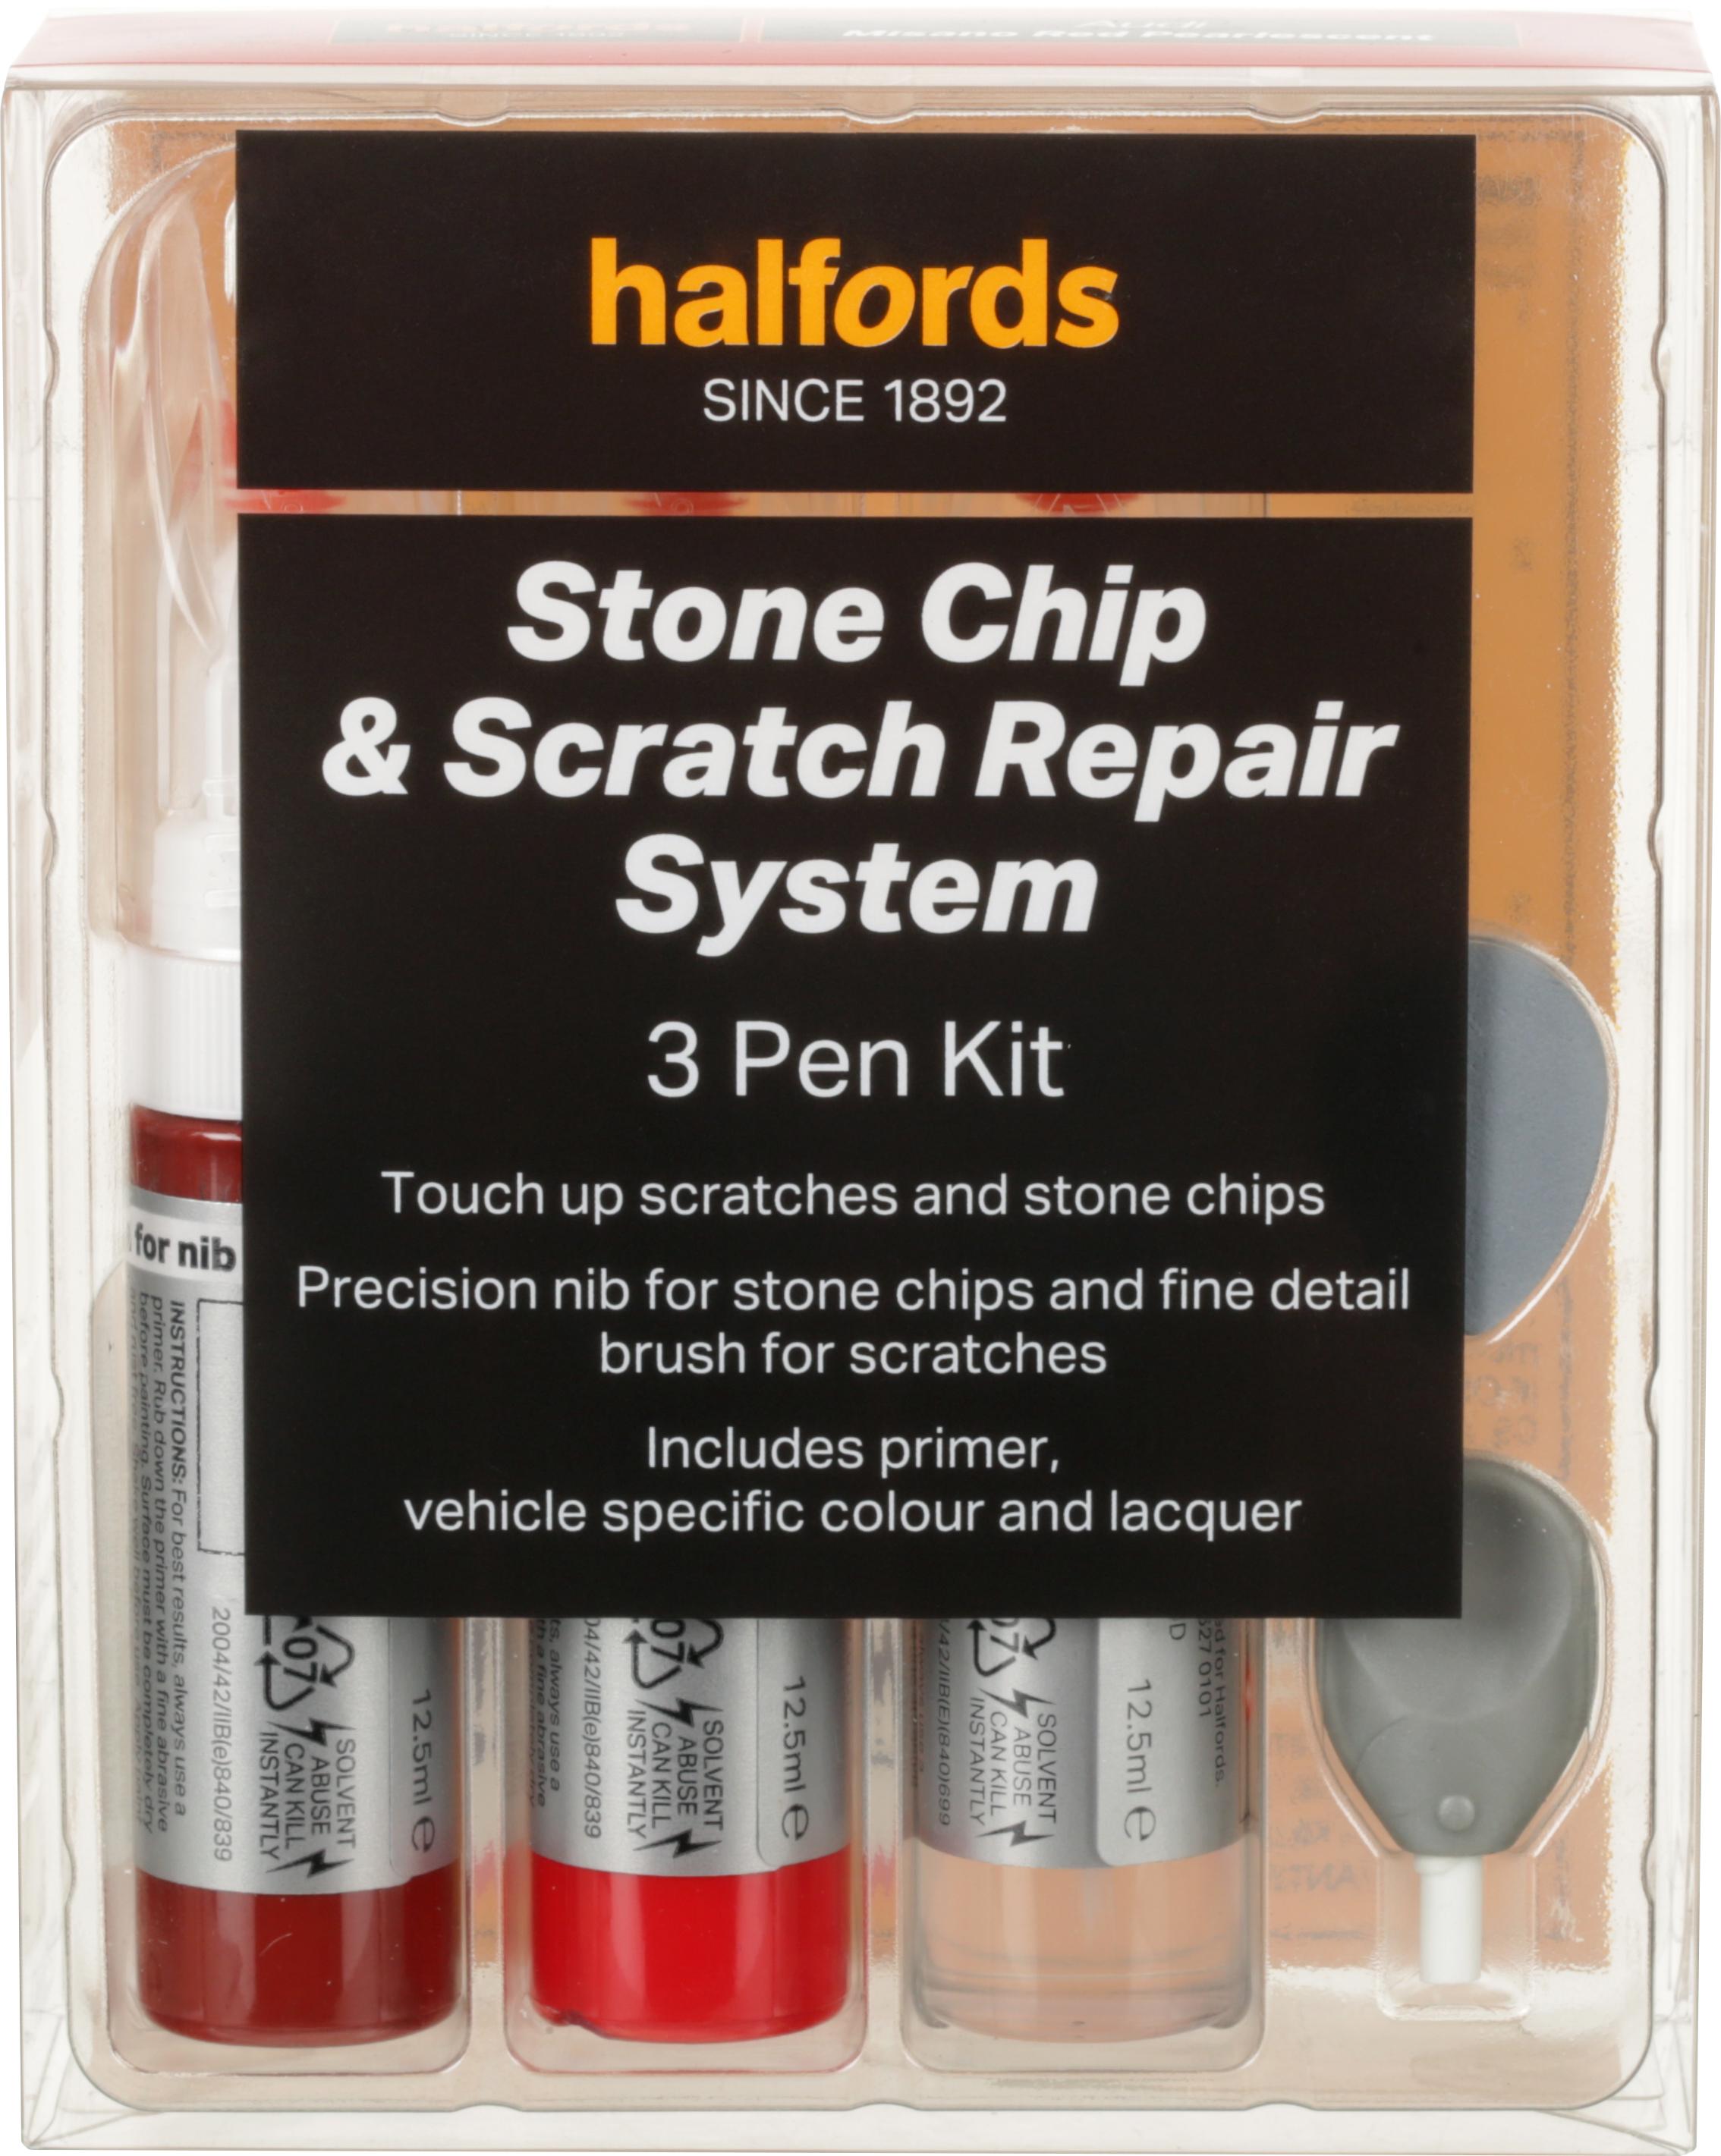 Halfords Audi Misano Red Scratch & Chip Repair Kit